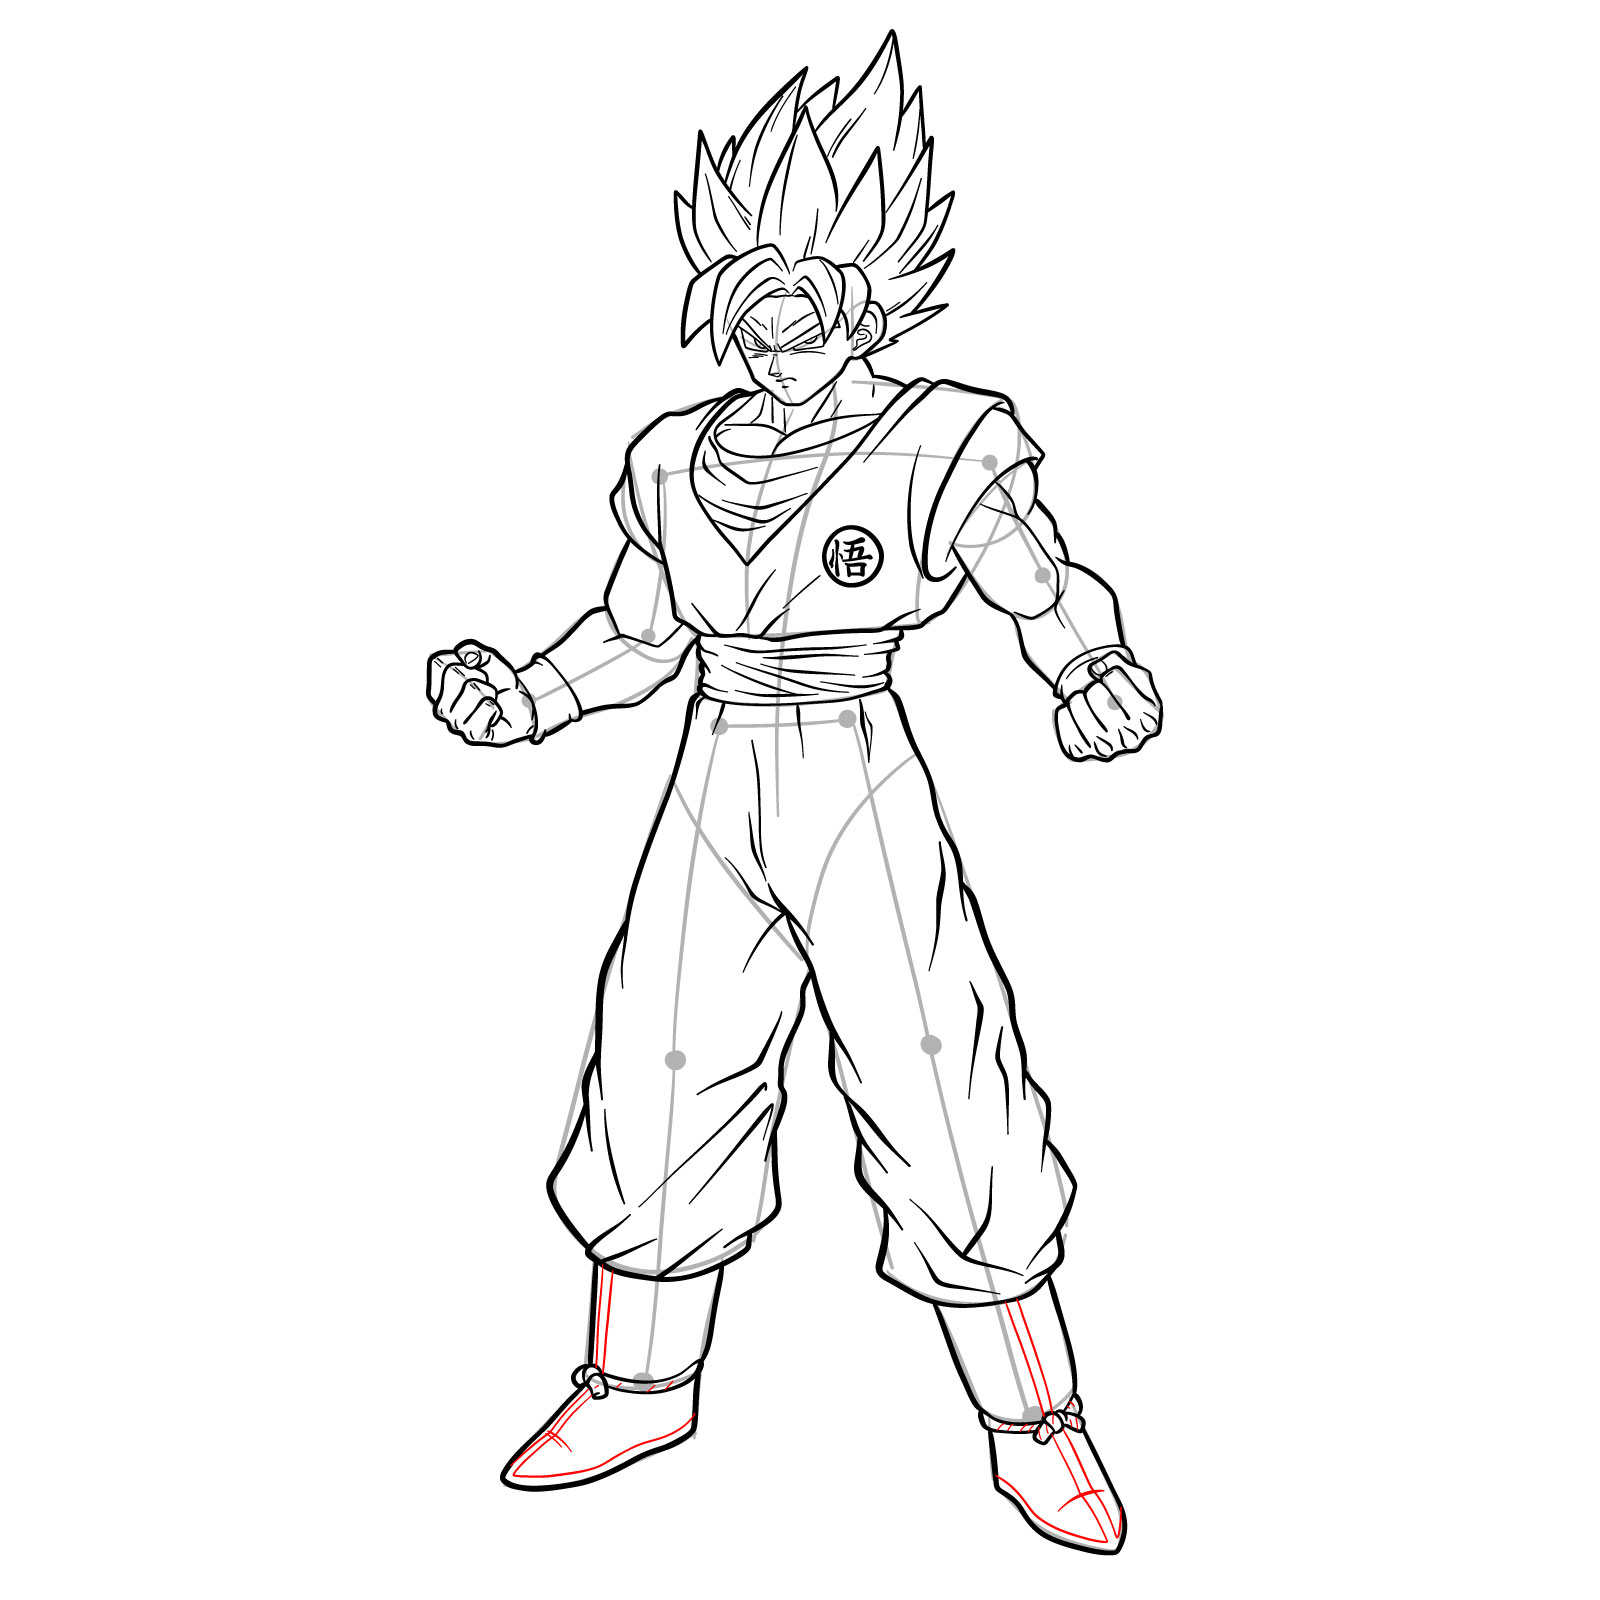 Son Goku Drawing Tutorial - How to draw Son Goku step by step